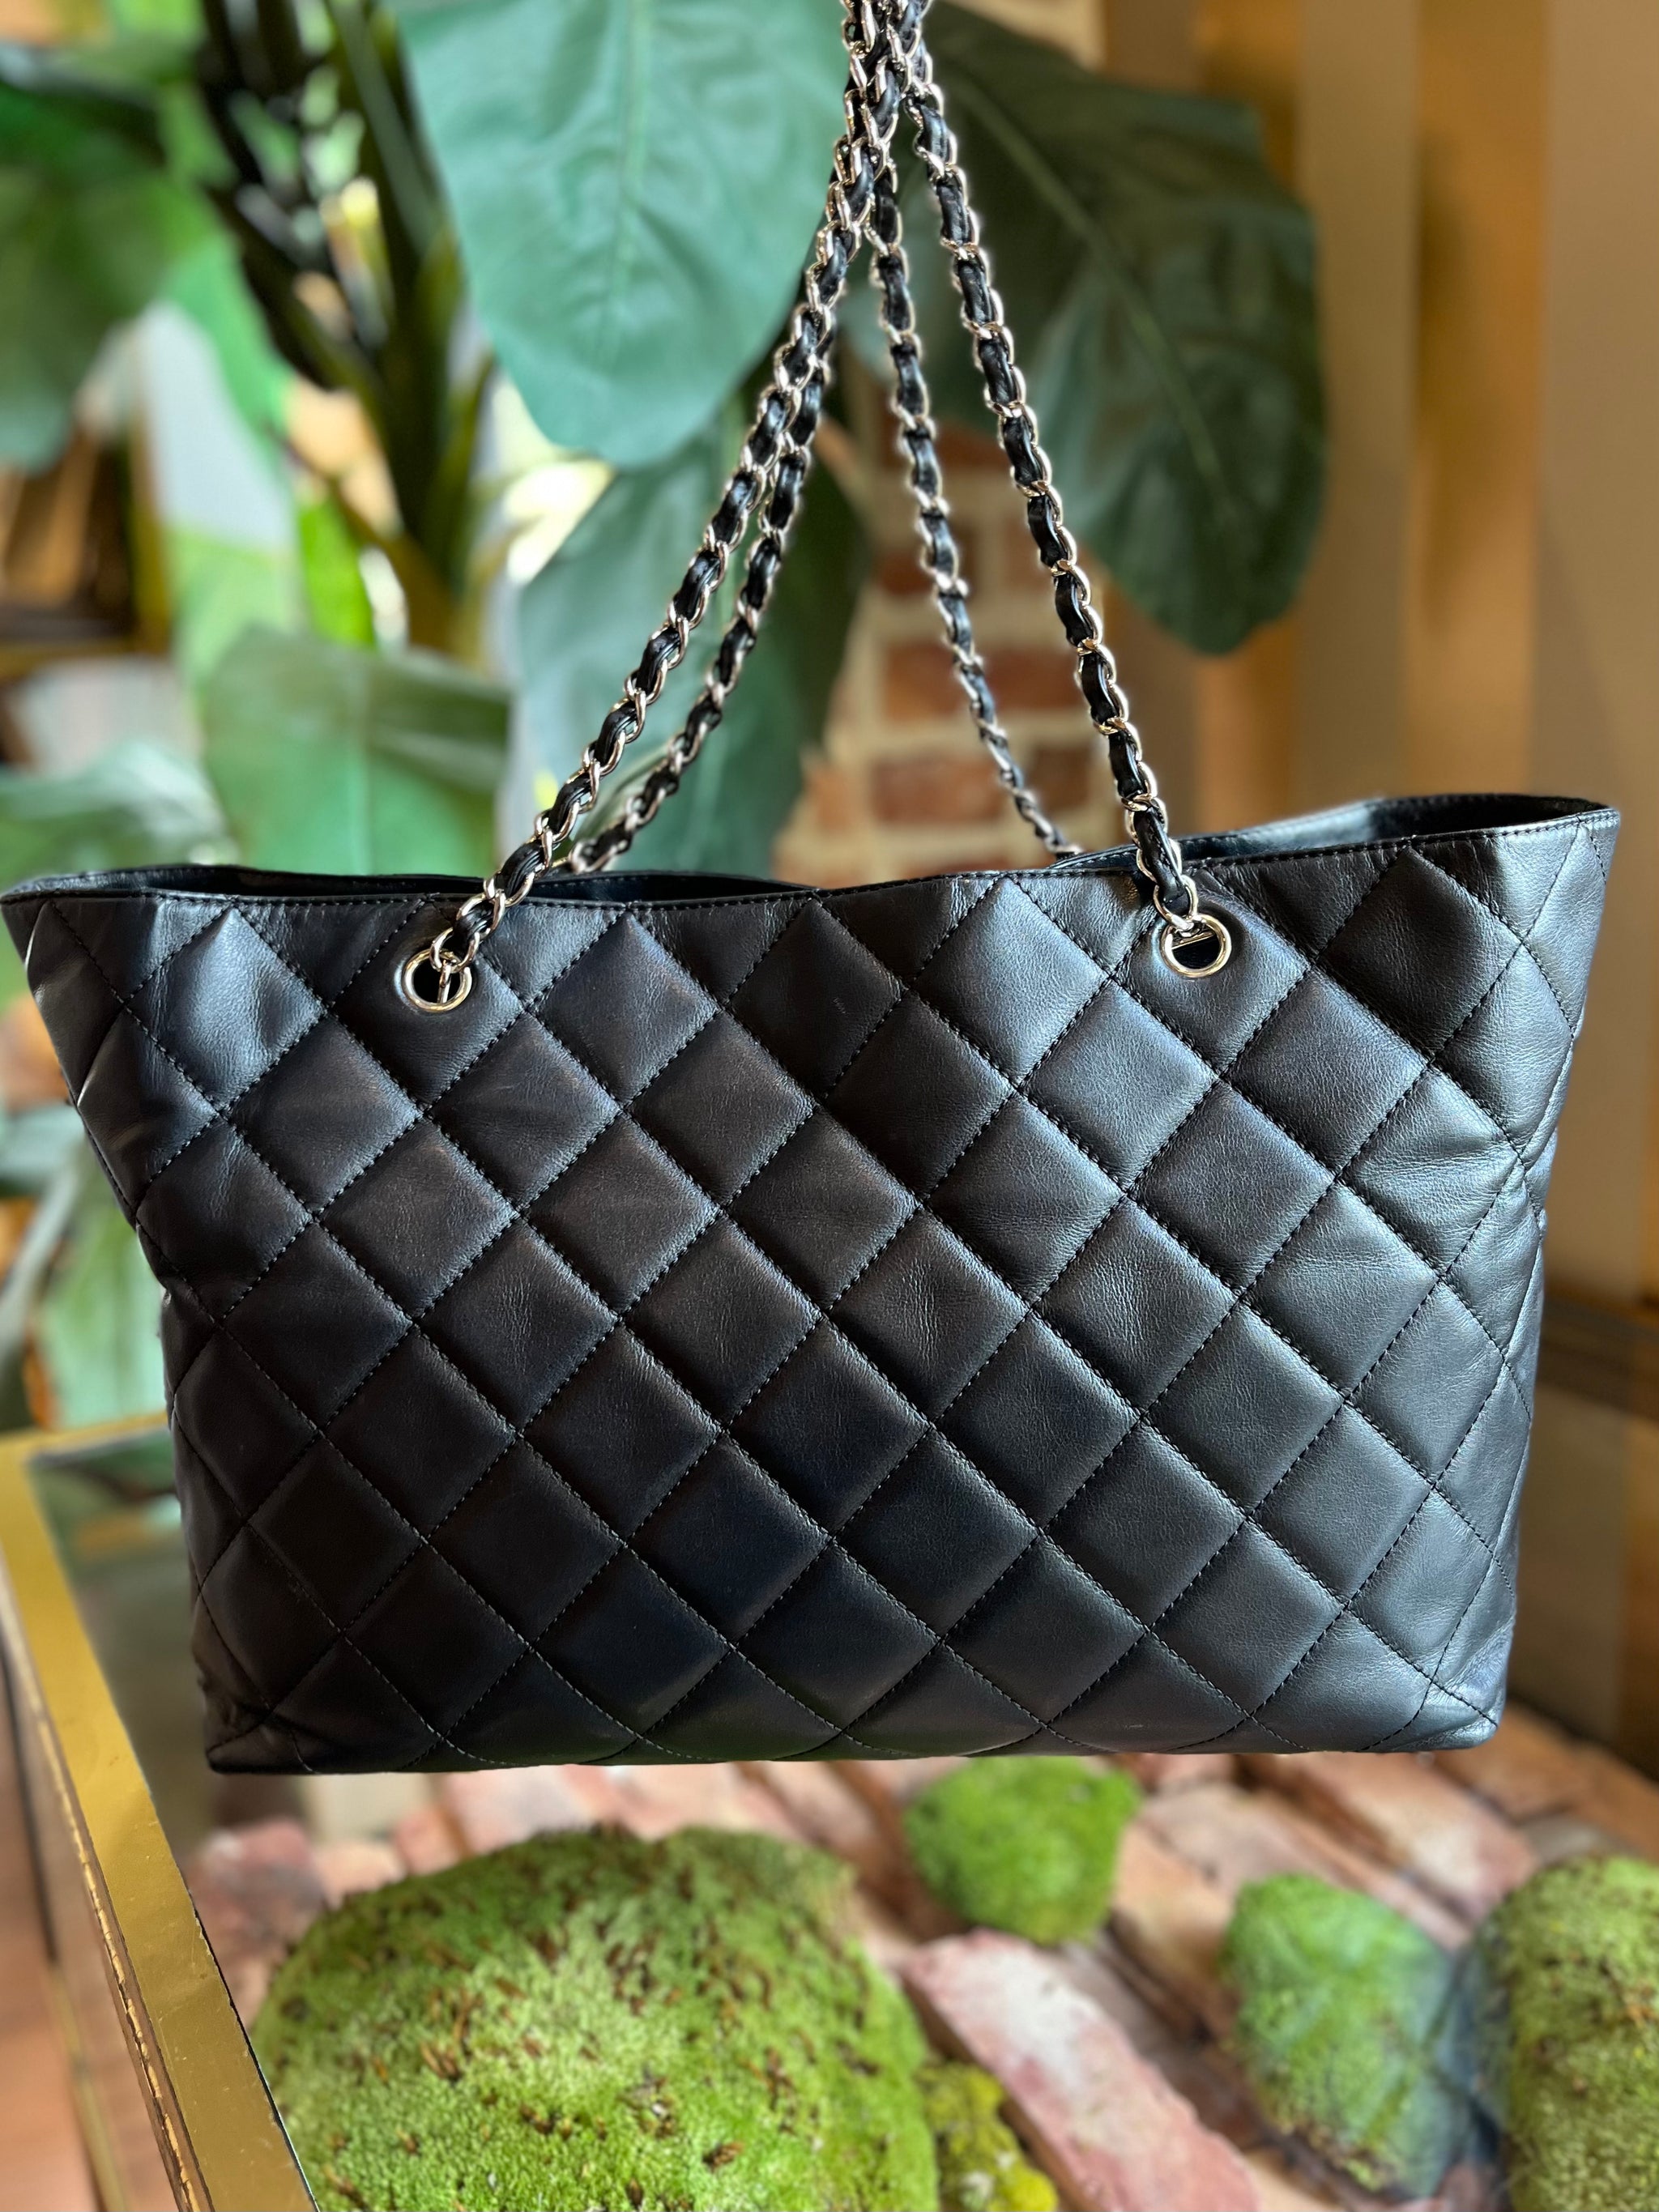 Chanel Womens Black White Quilted Chain Straps Chanel Lido Tote Bag Handbag